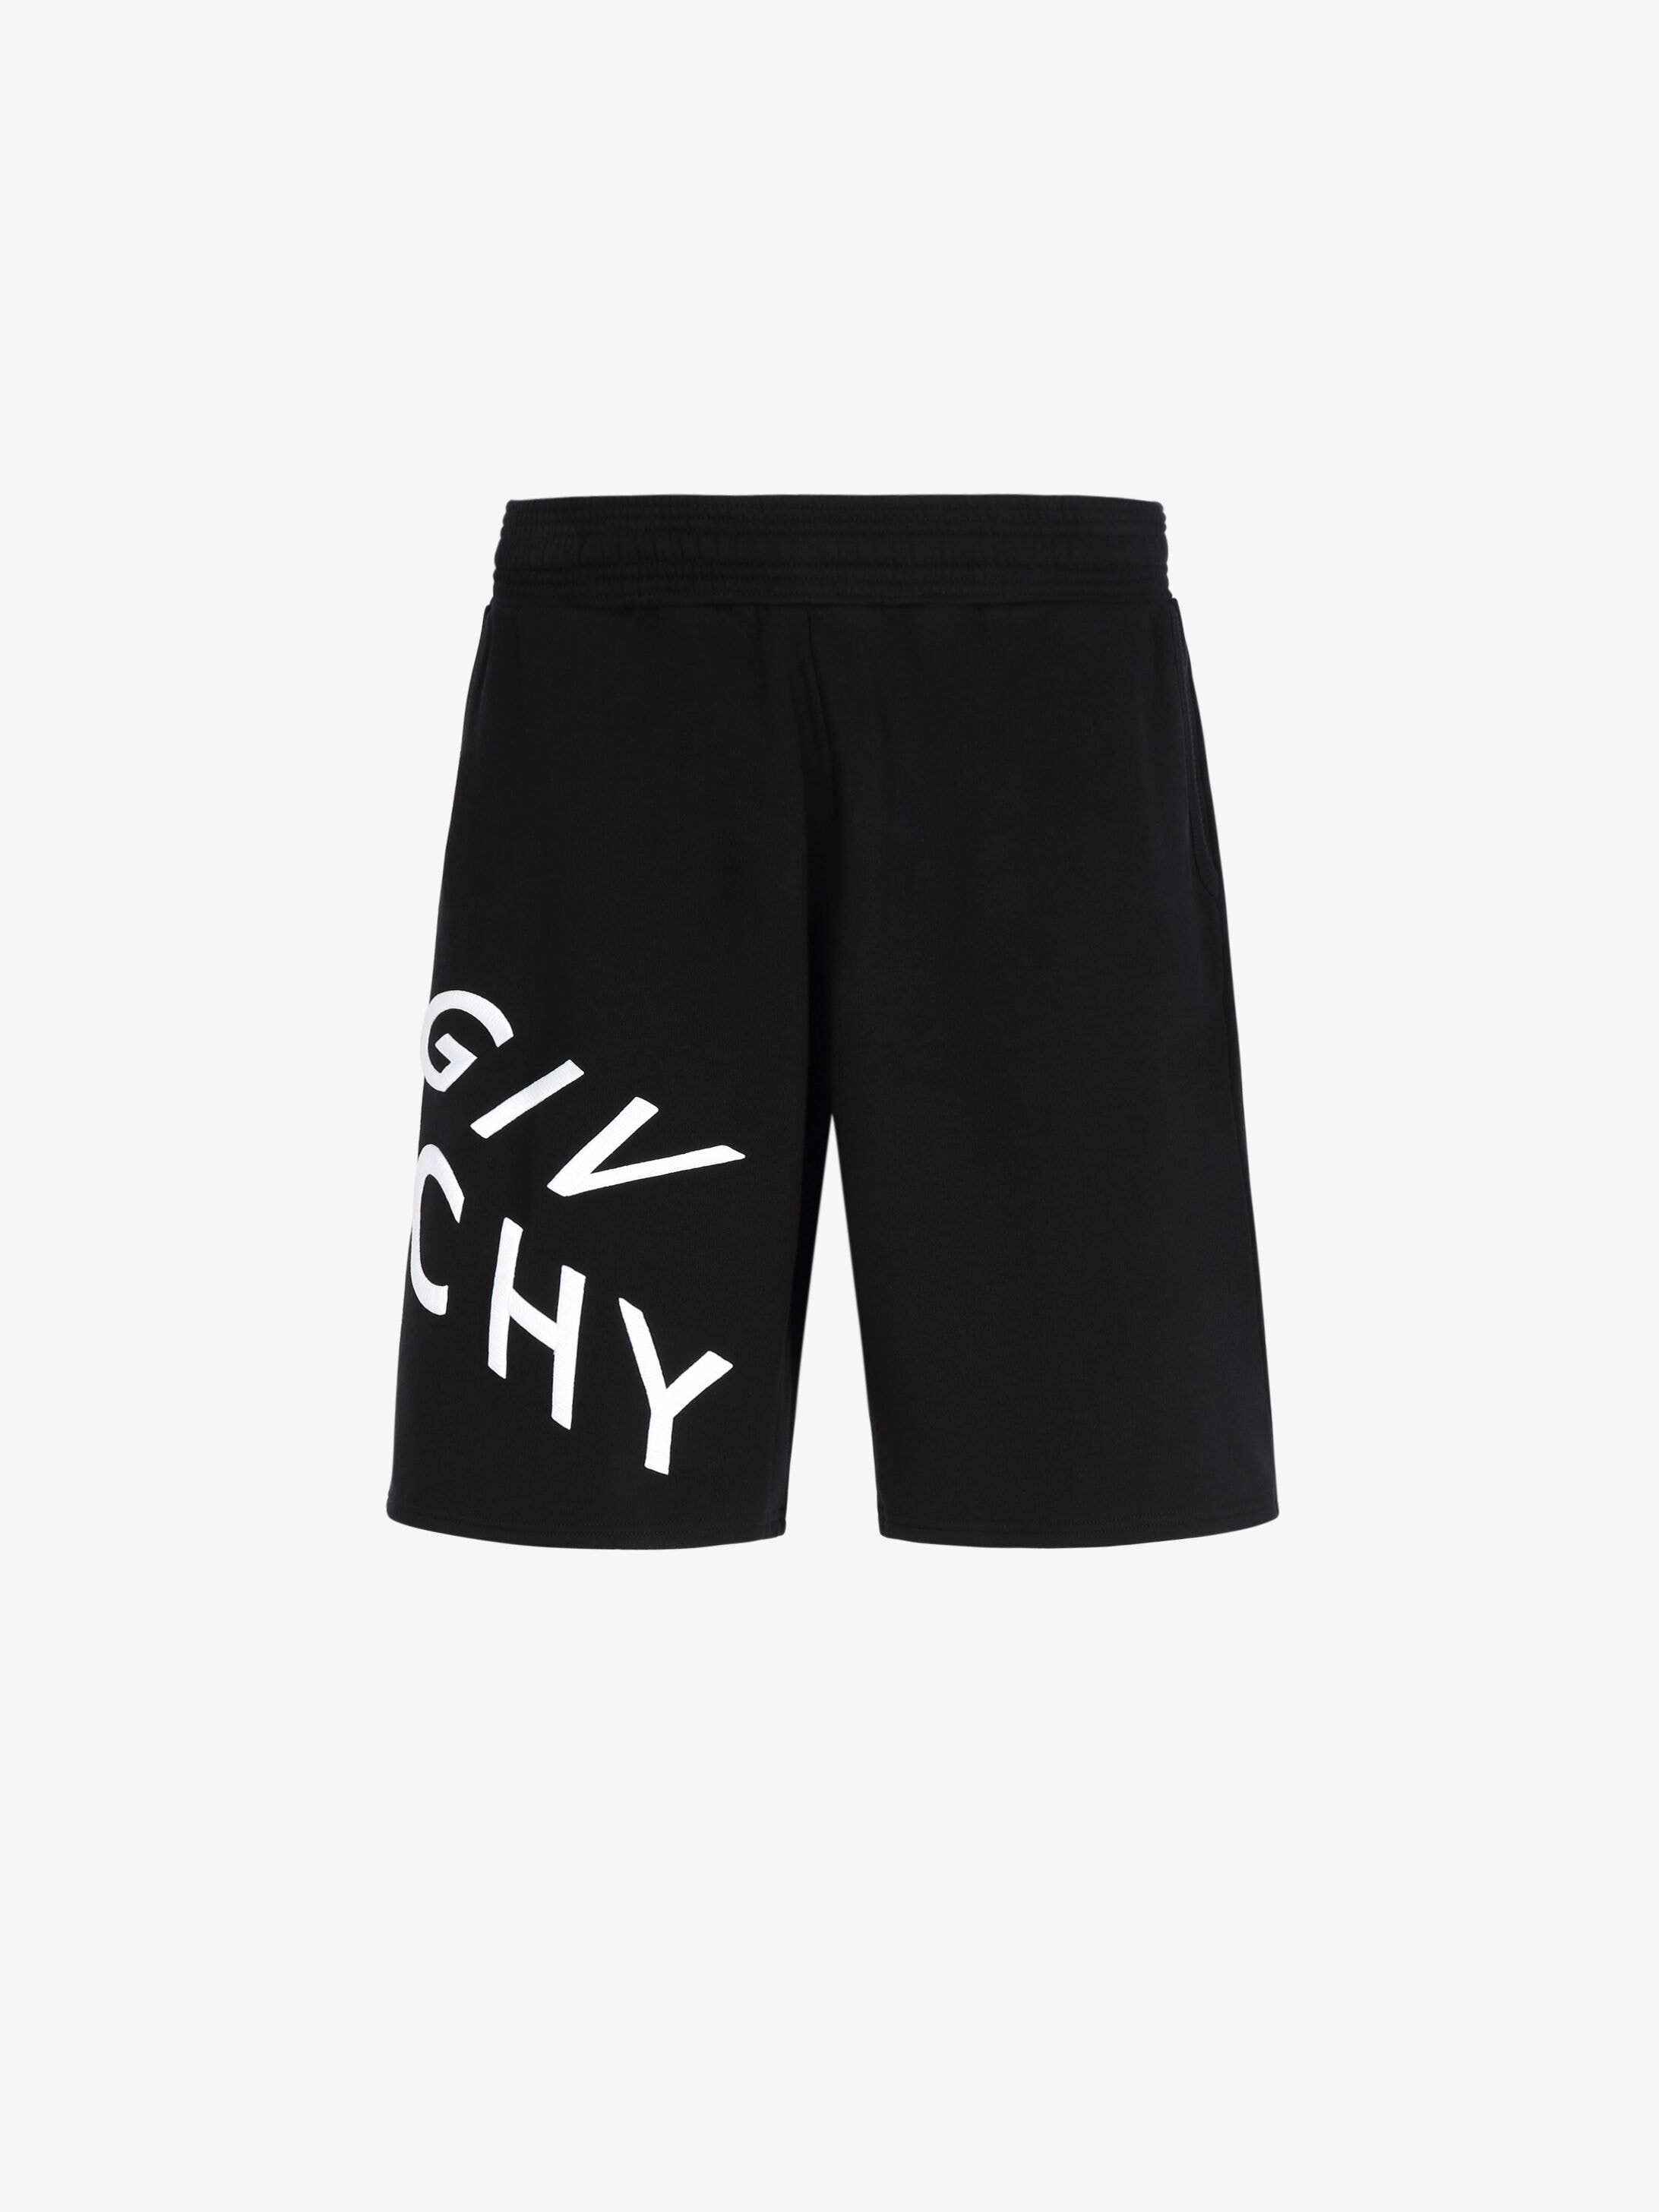 Shorts | Men Ready-to-wear | GIVENCHY 